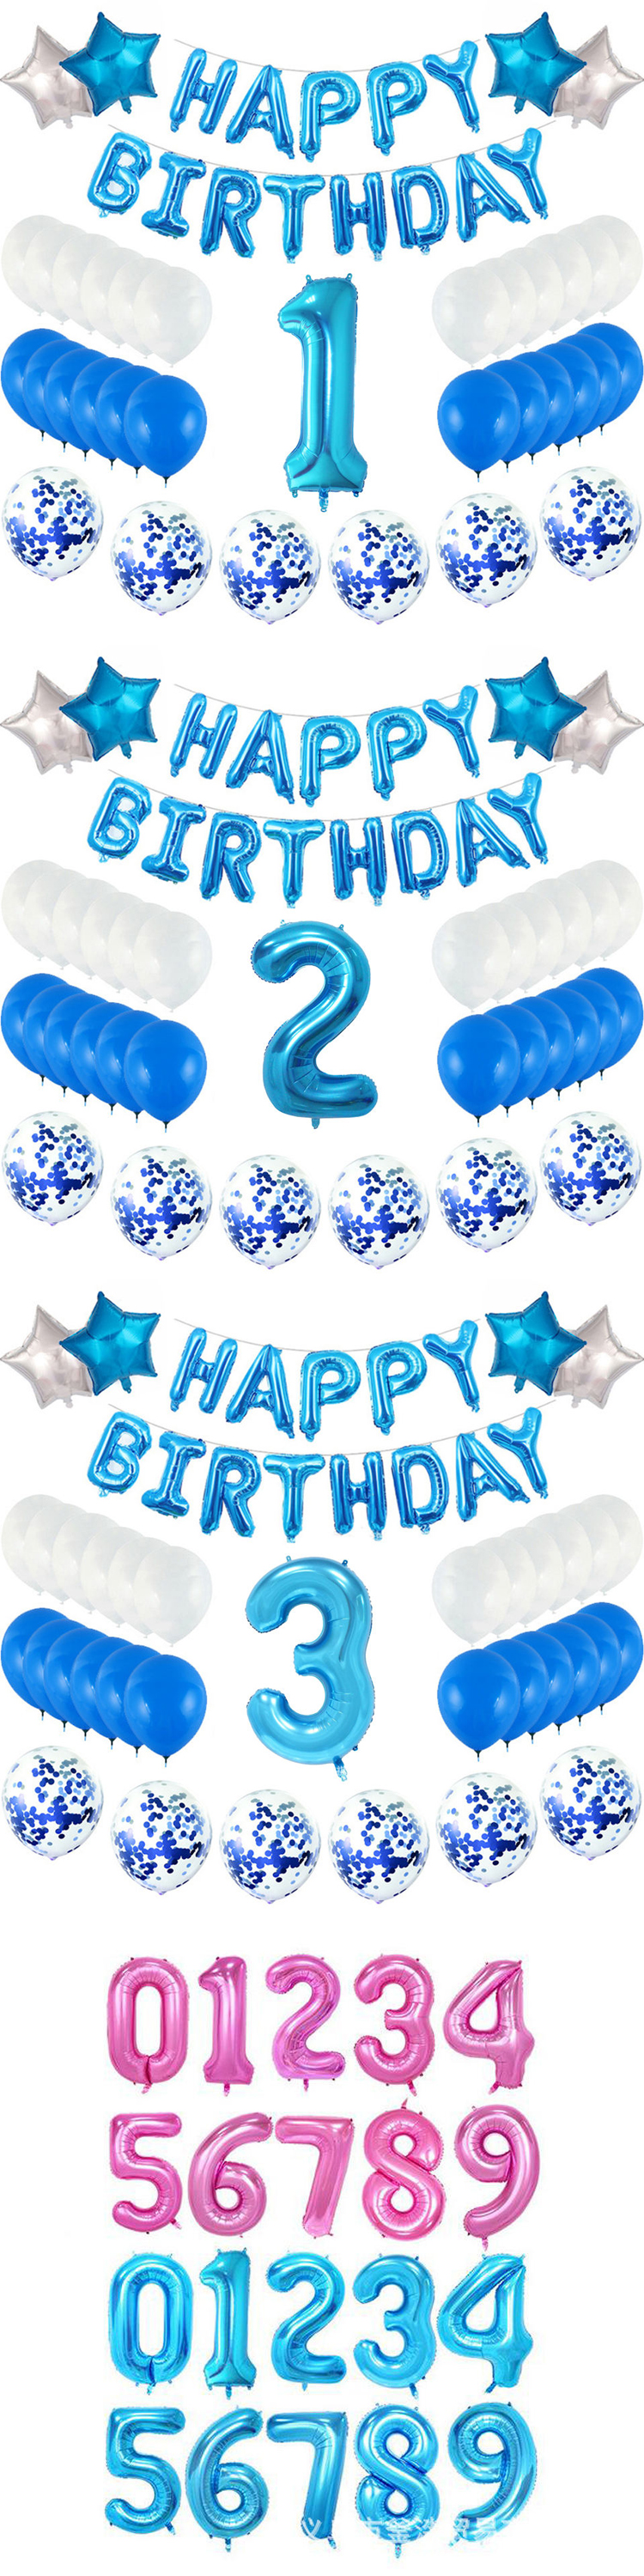 PAFU Blue Birthday Party Supplies Happy Birthday Balloons Banner Confetti Balloons Foil Curtain Birthday Decoration